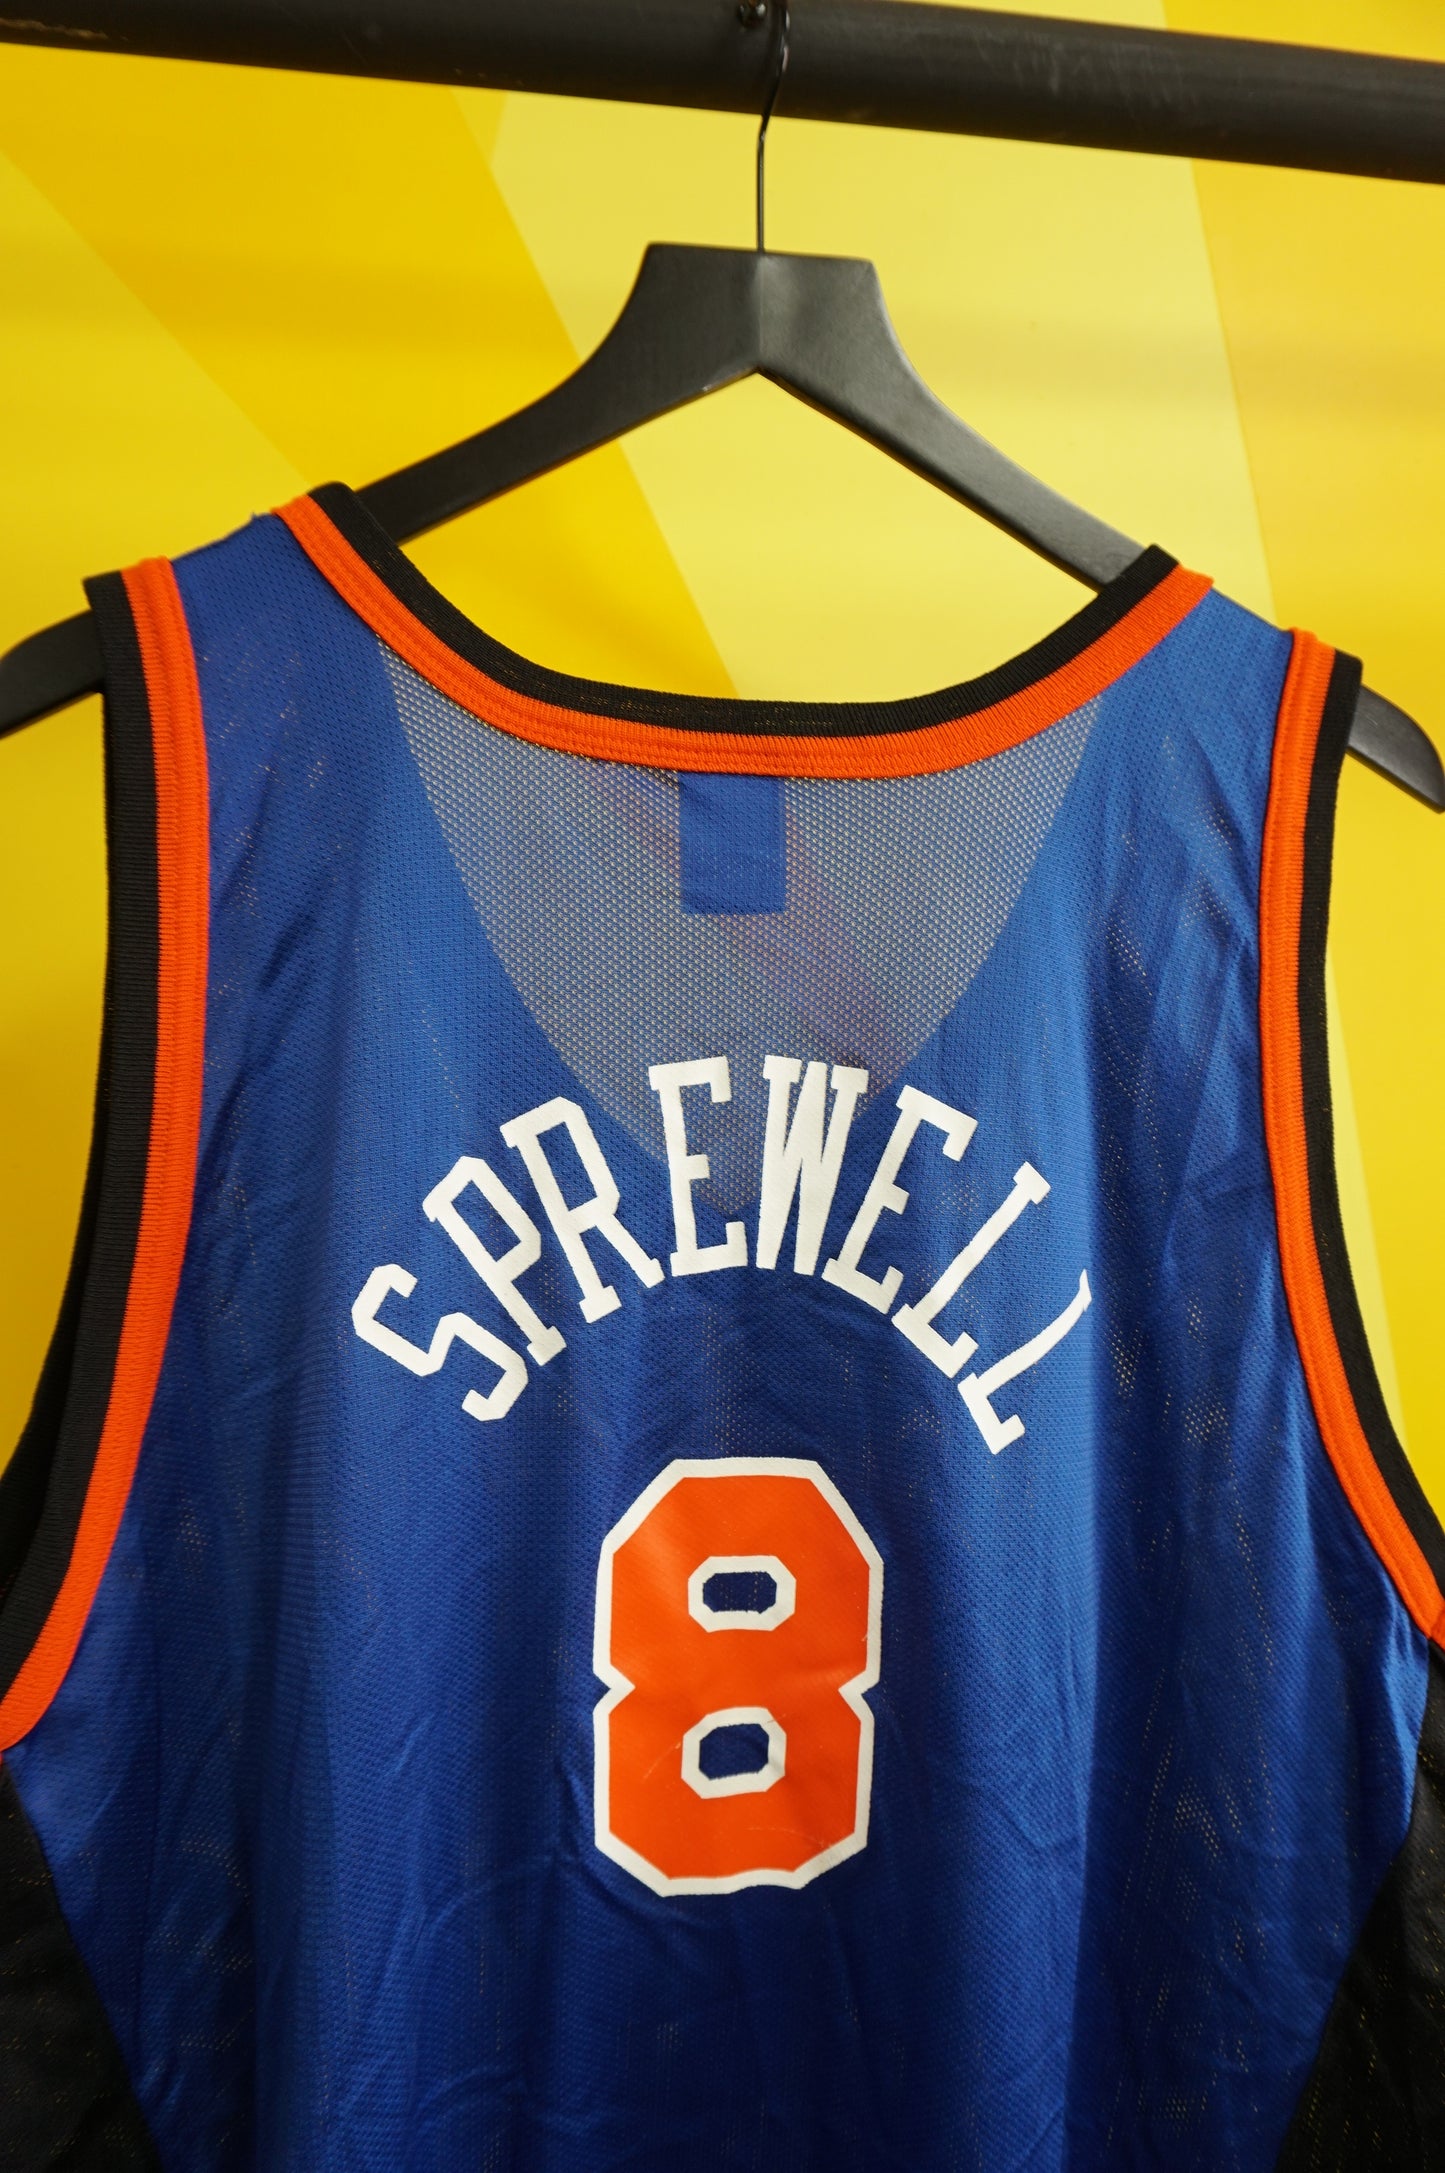 (XXL) Vtg New York Knicks Latrell Sprewell Jersey